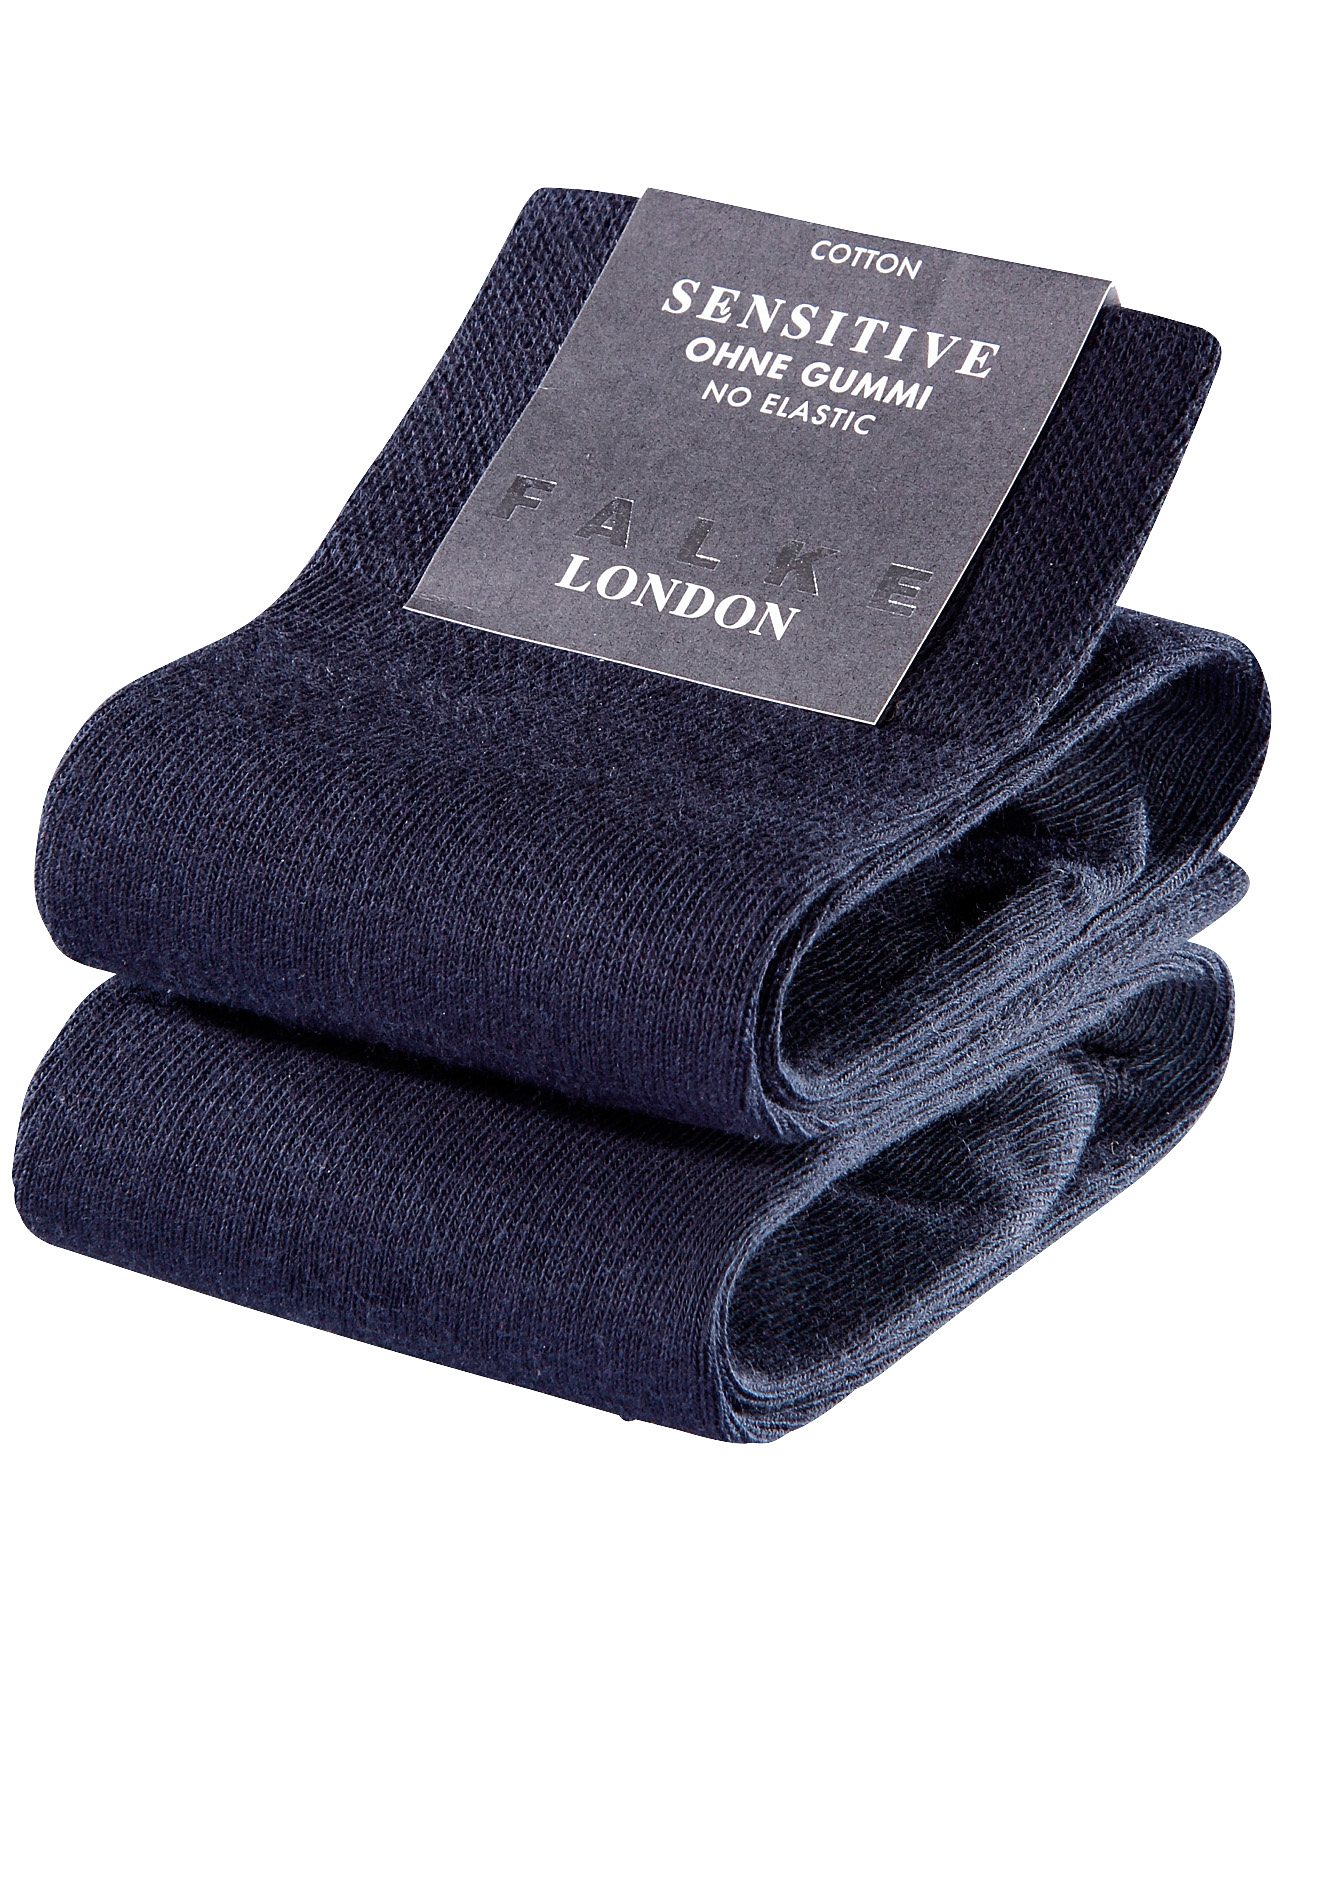 FALKE Socken “Sensitive London”, (2 Paar), mit sensitve Bündchen ohne Gummi